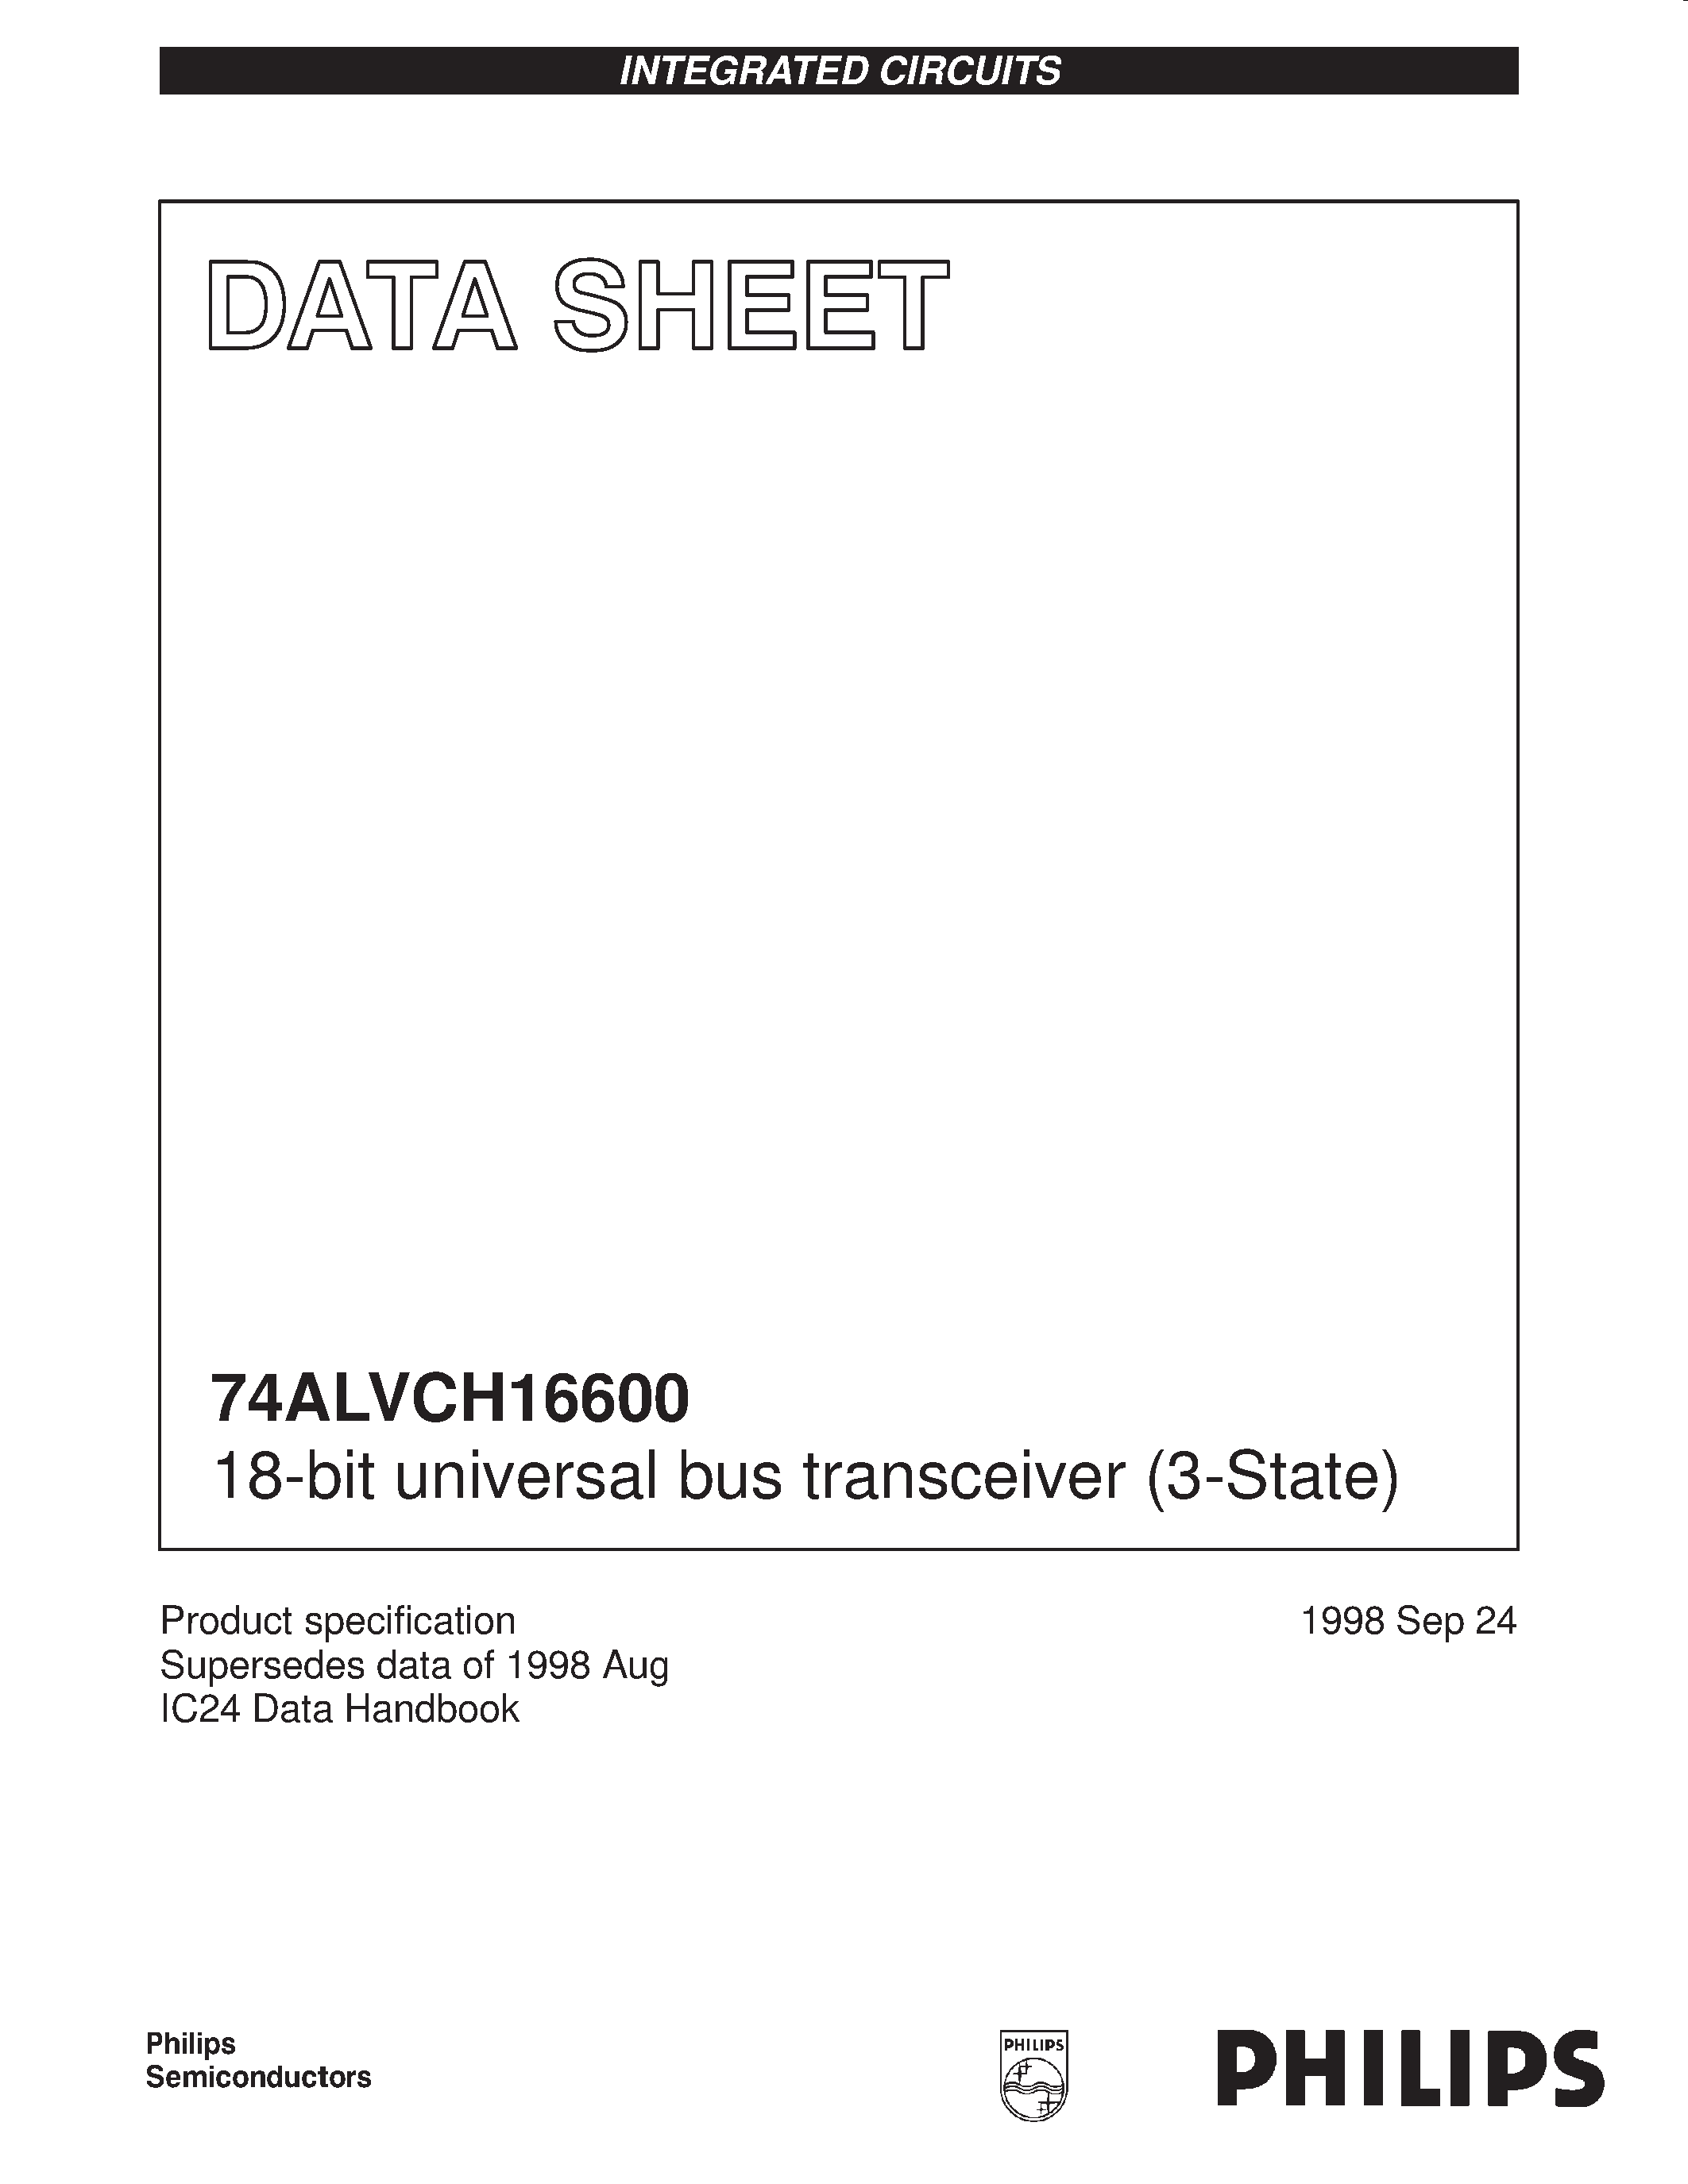 Даташит 74ALVCH16600 - 18-bit universal bus transceiver 3-State страница 1